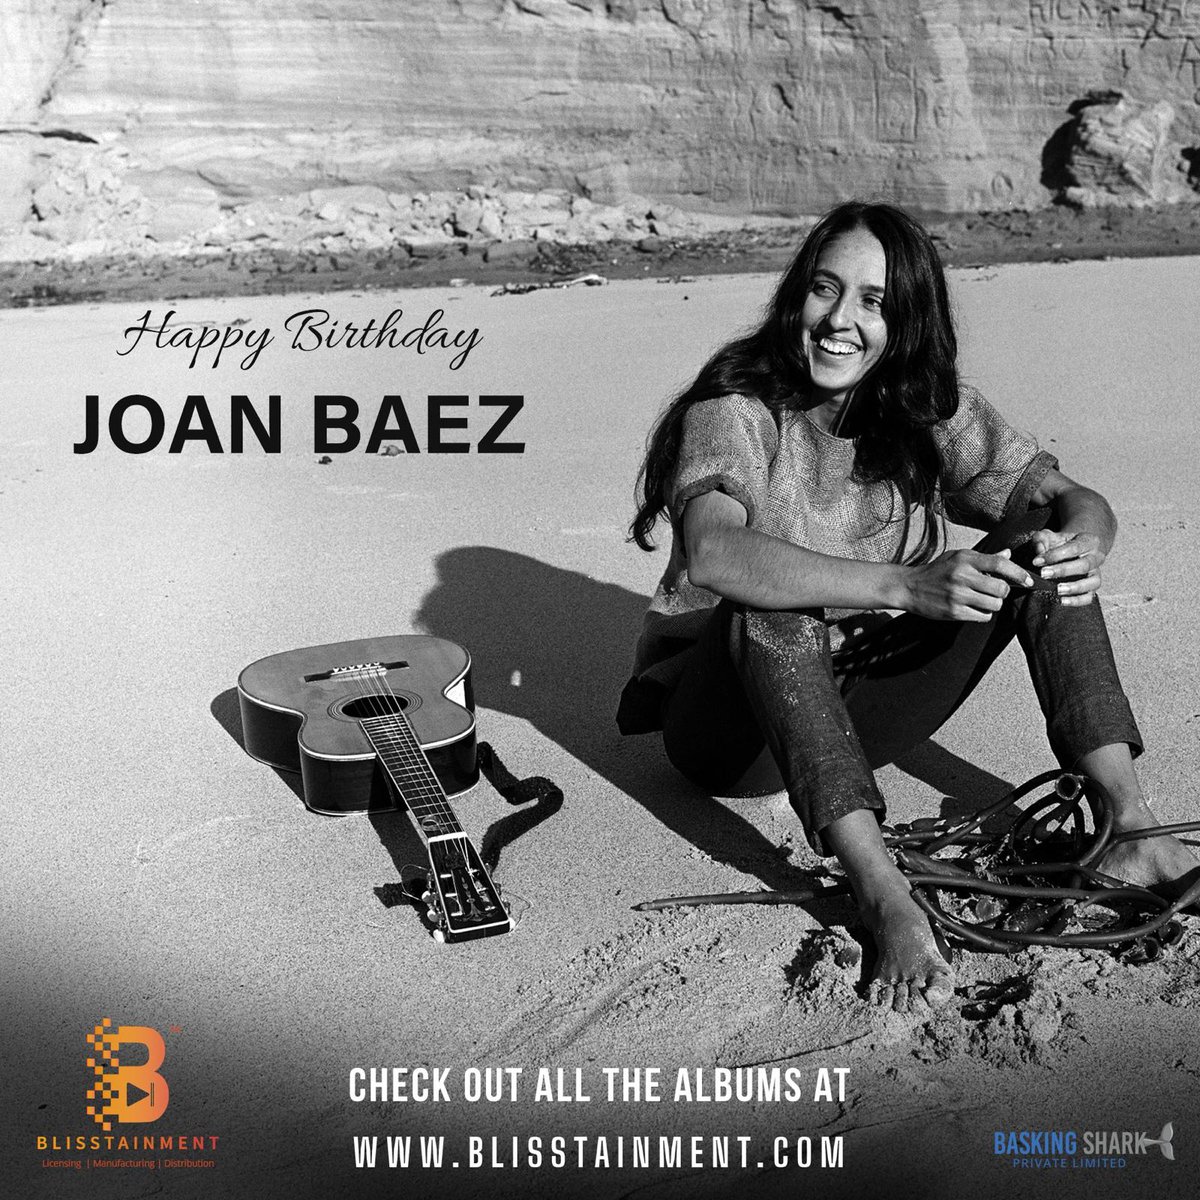 Celebrating Joan Baez's Birthday with the timeless magic of folk melodies on vinyl. 🎶✨

 #JoanBaez #FolkMusic #VinylRecords #MusicalLegend #BirthdayCelebration #TimelessTunes #MusicMagic #SingerSongwriter #AcousticMelodies #VintageVibes #VinylLove #FolkIcon #BirthdayJoy